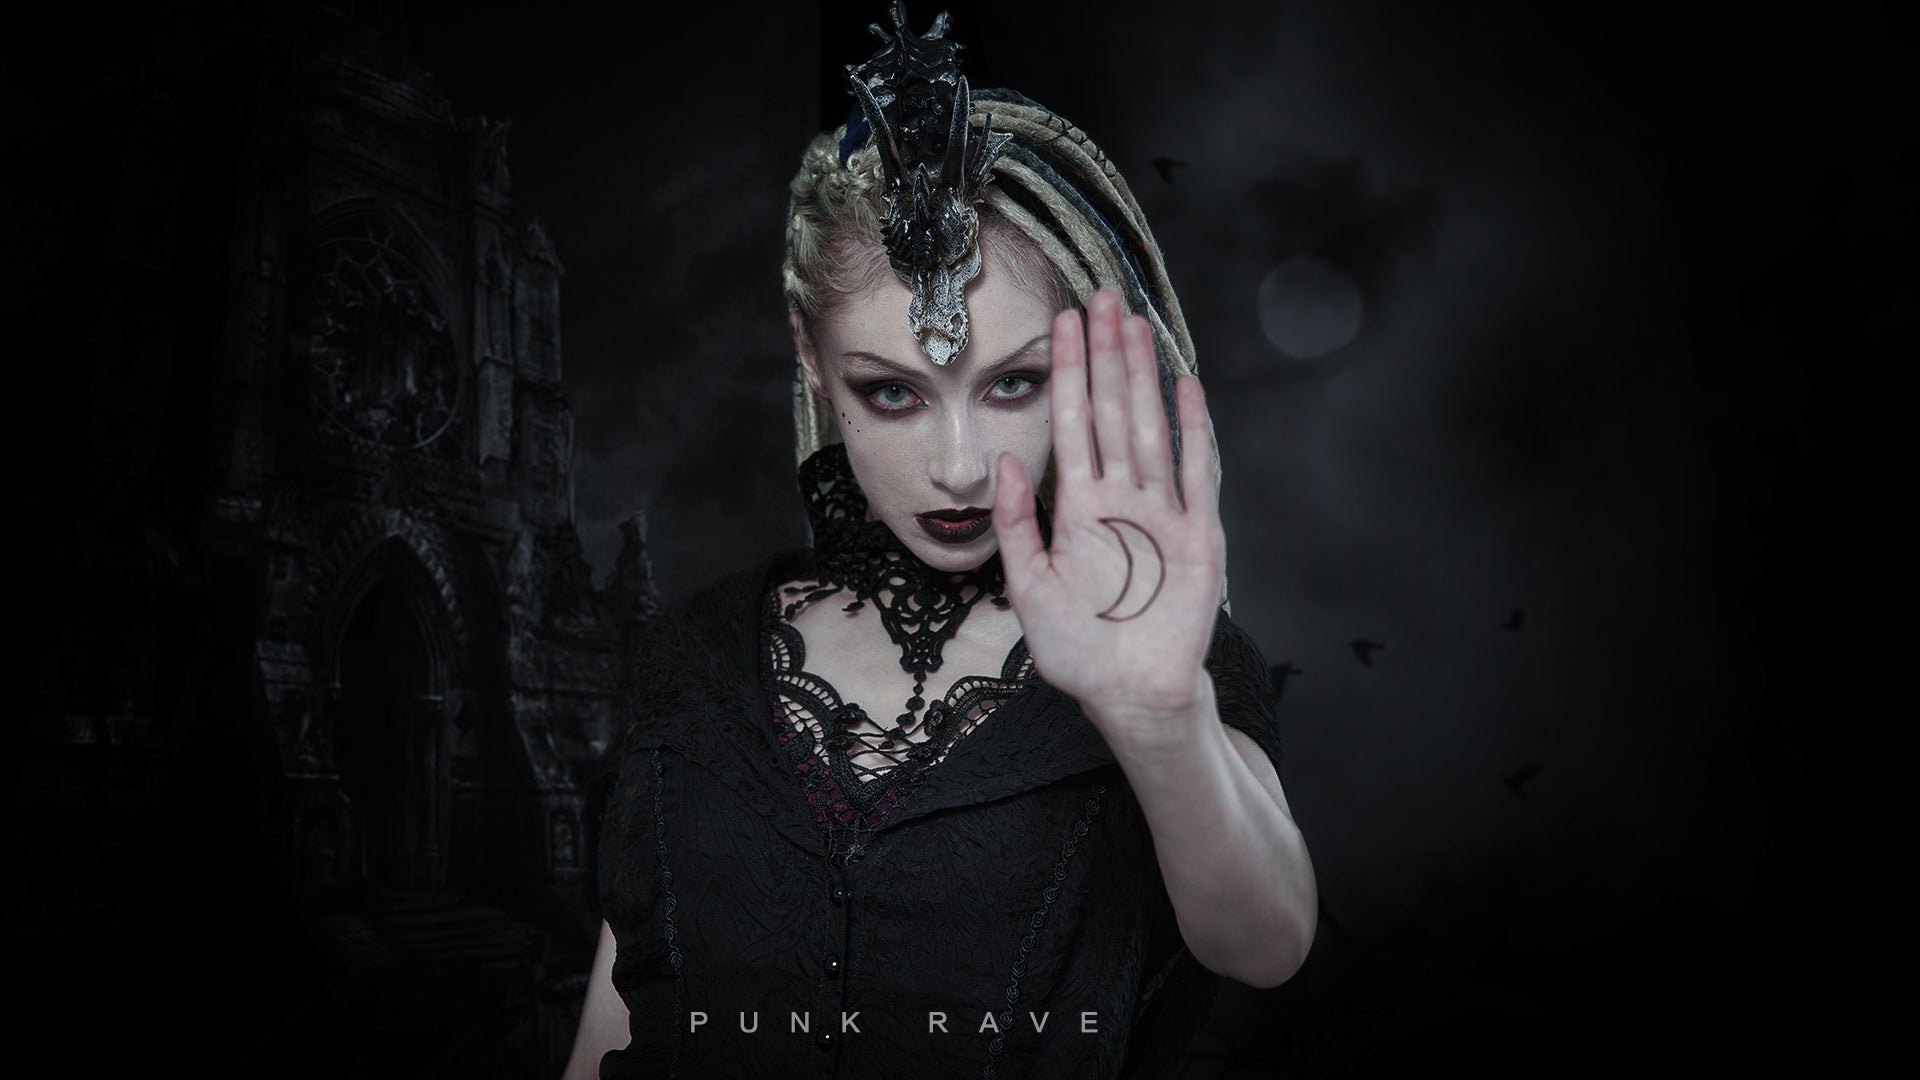 Punk Rave UK - Official UK Distributors of Punk Rave Gothic Clothing